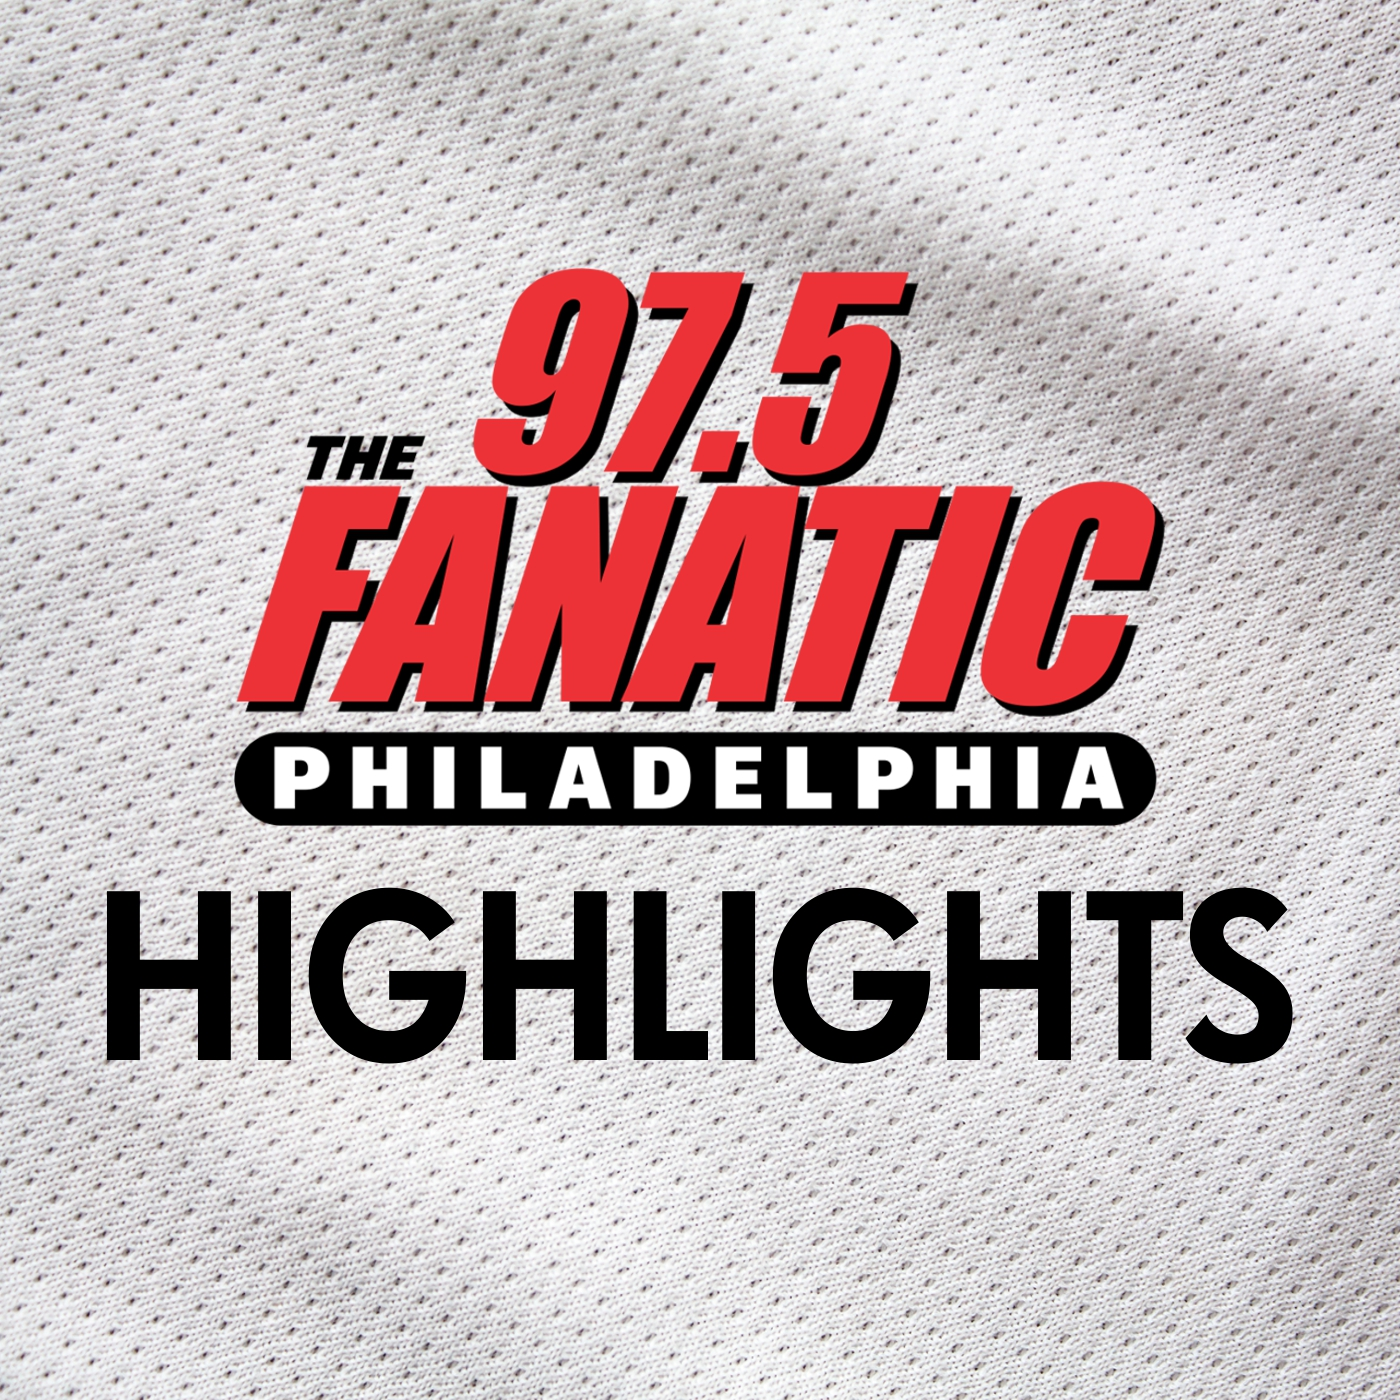 Fanatic Weekend | Bill Colarulo | Excitement With The Coordinators & Phillies Platoons